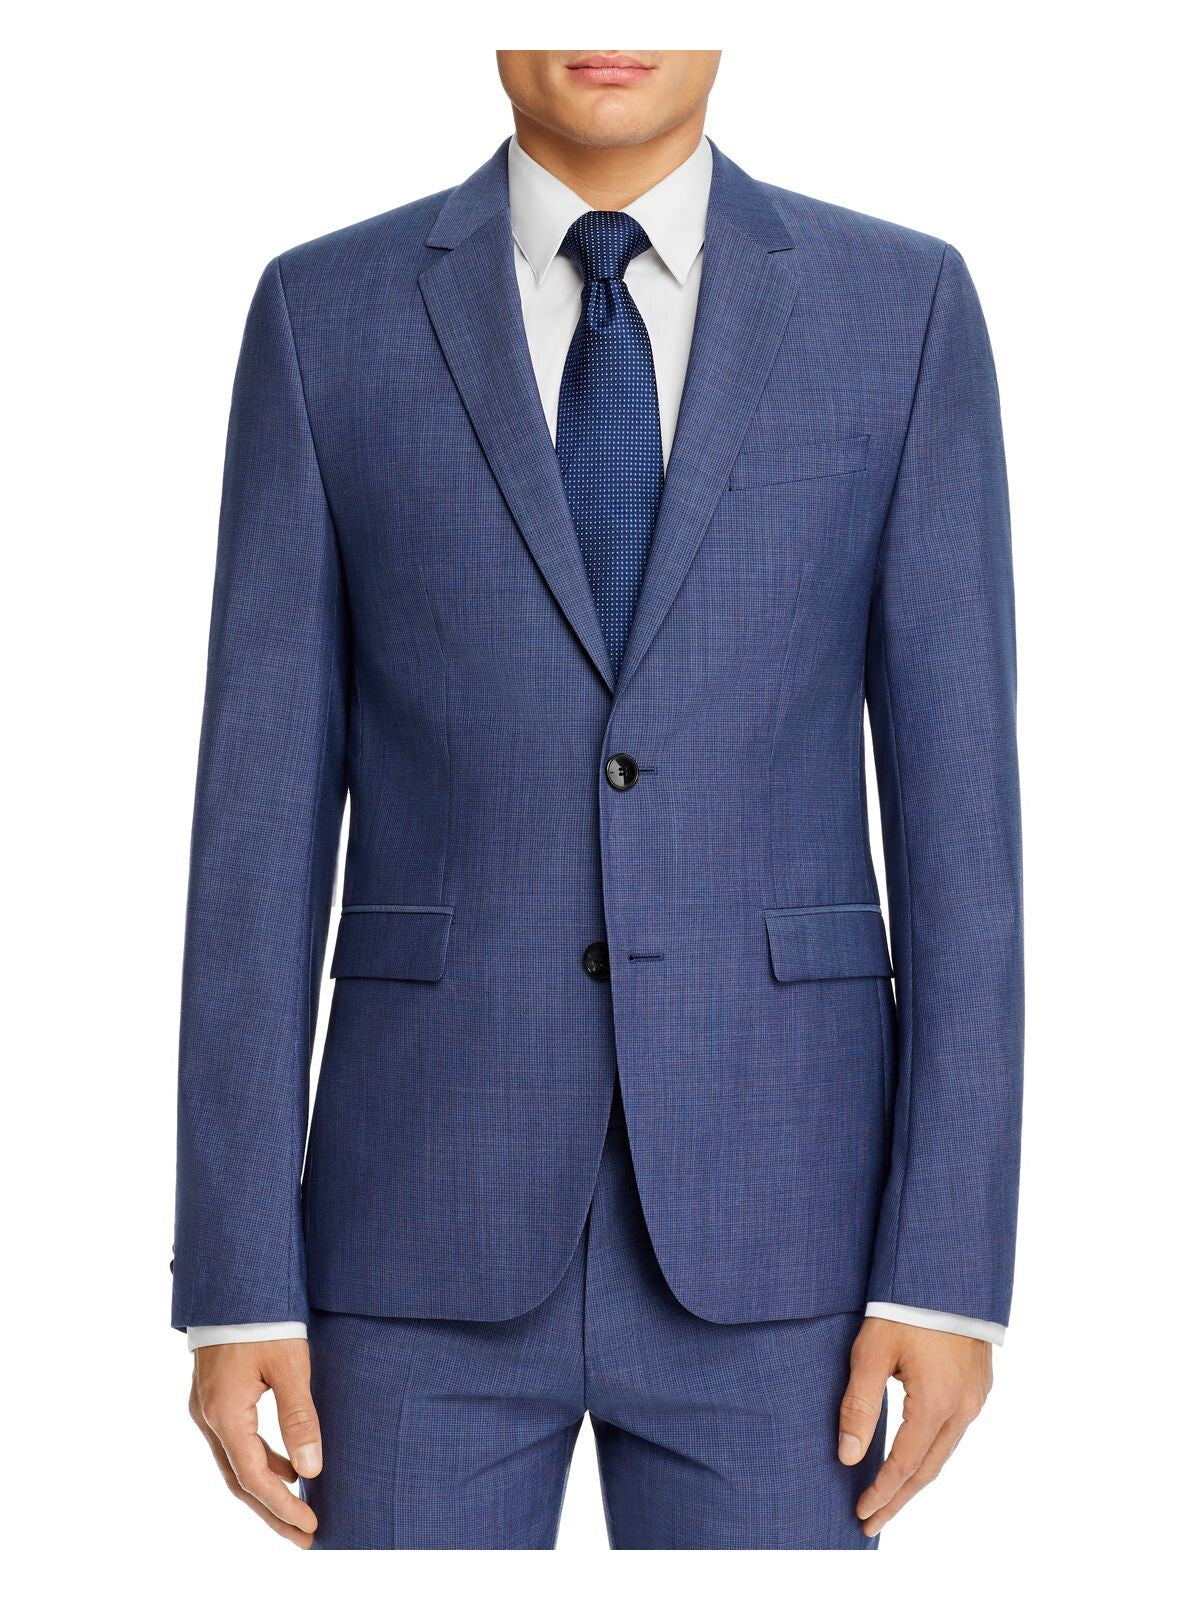 HUGO BOSS Mens Blue Single Breasted, Wool Blend Suit Jacket 46R